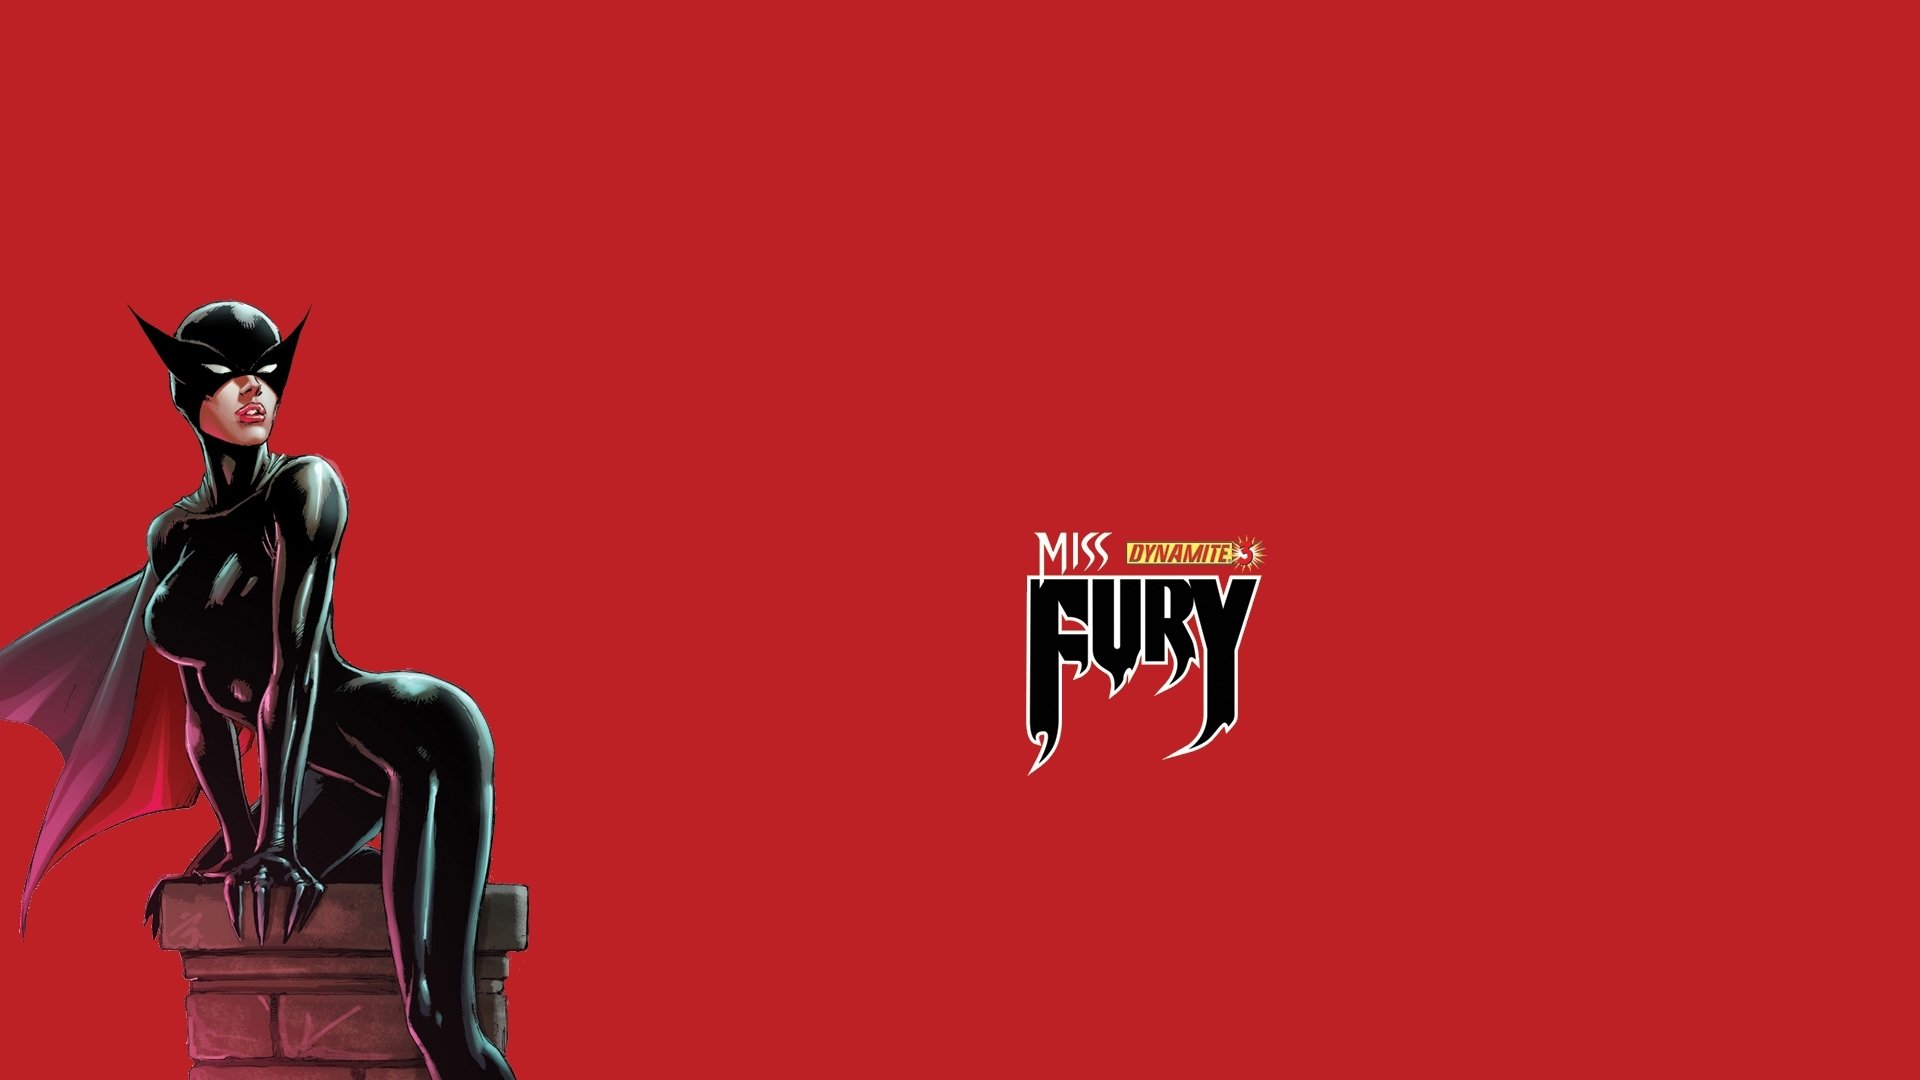 Miss Fury #2